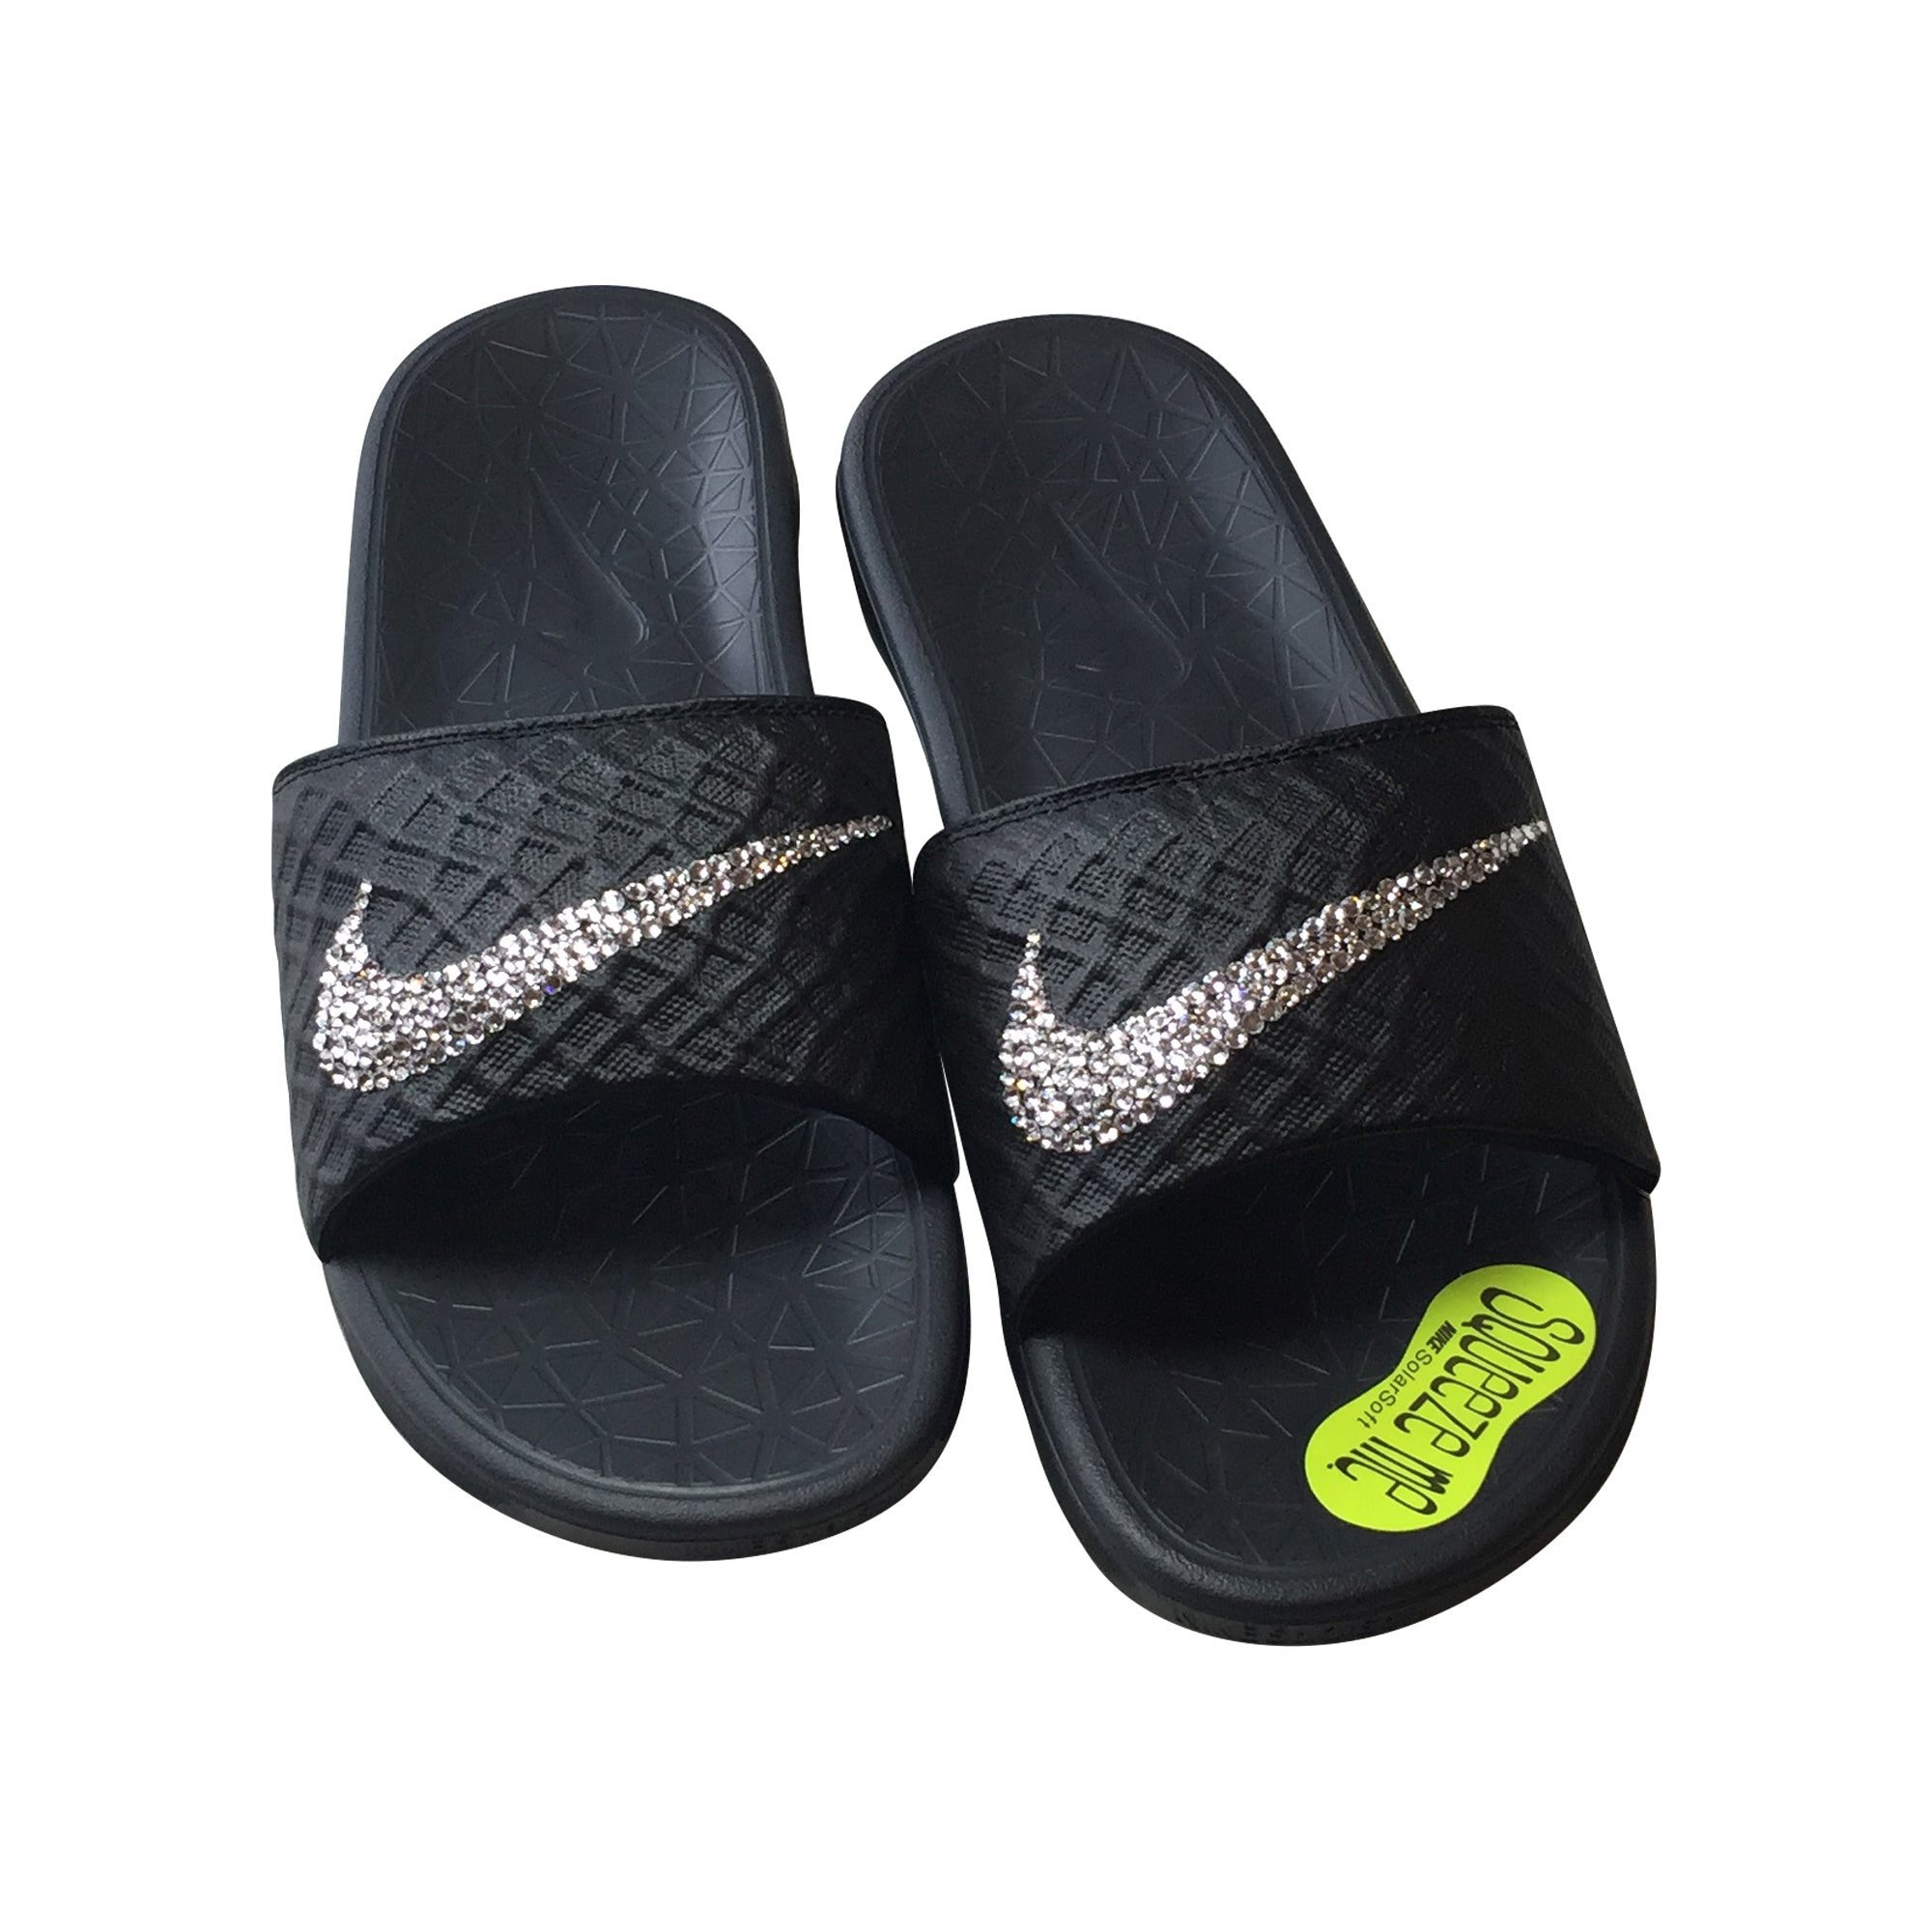 ilegal Luna chocar Women's Nike Slides With Bling on All Black Nike Solarsoft - Etsy